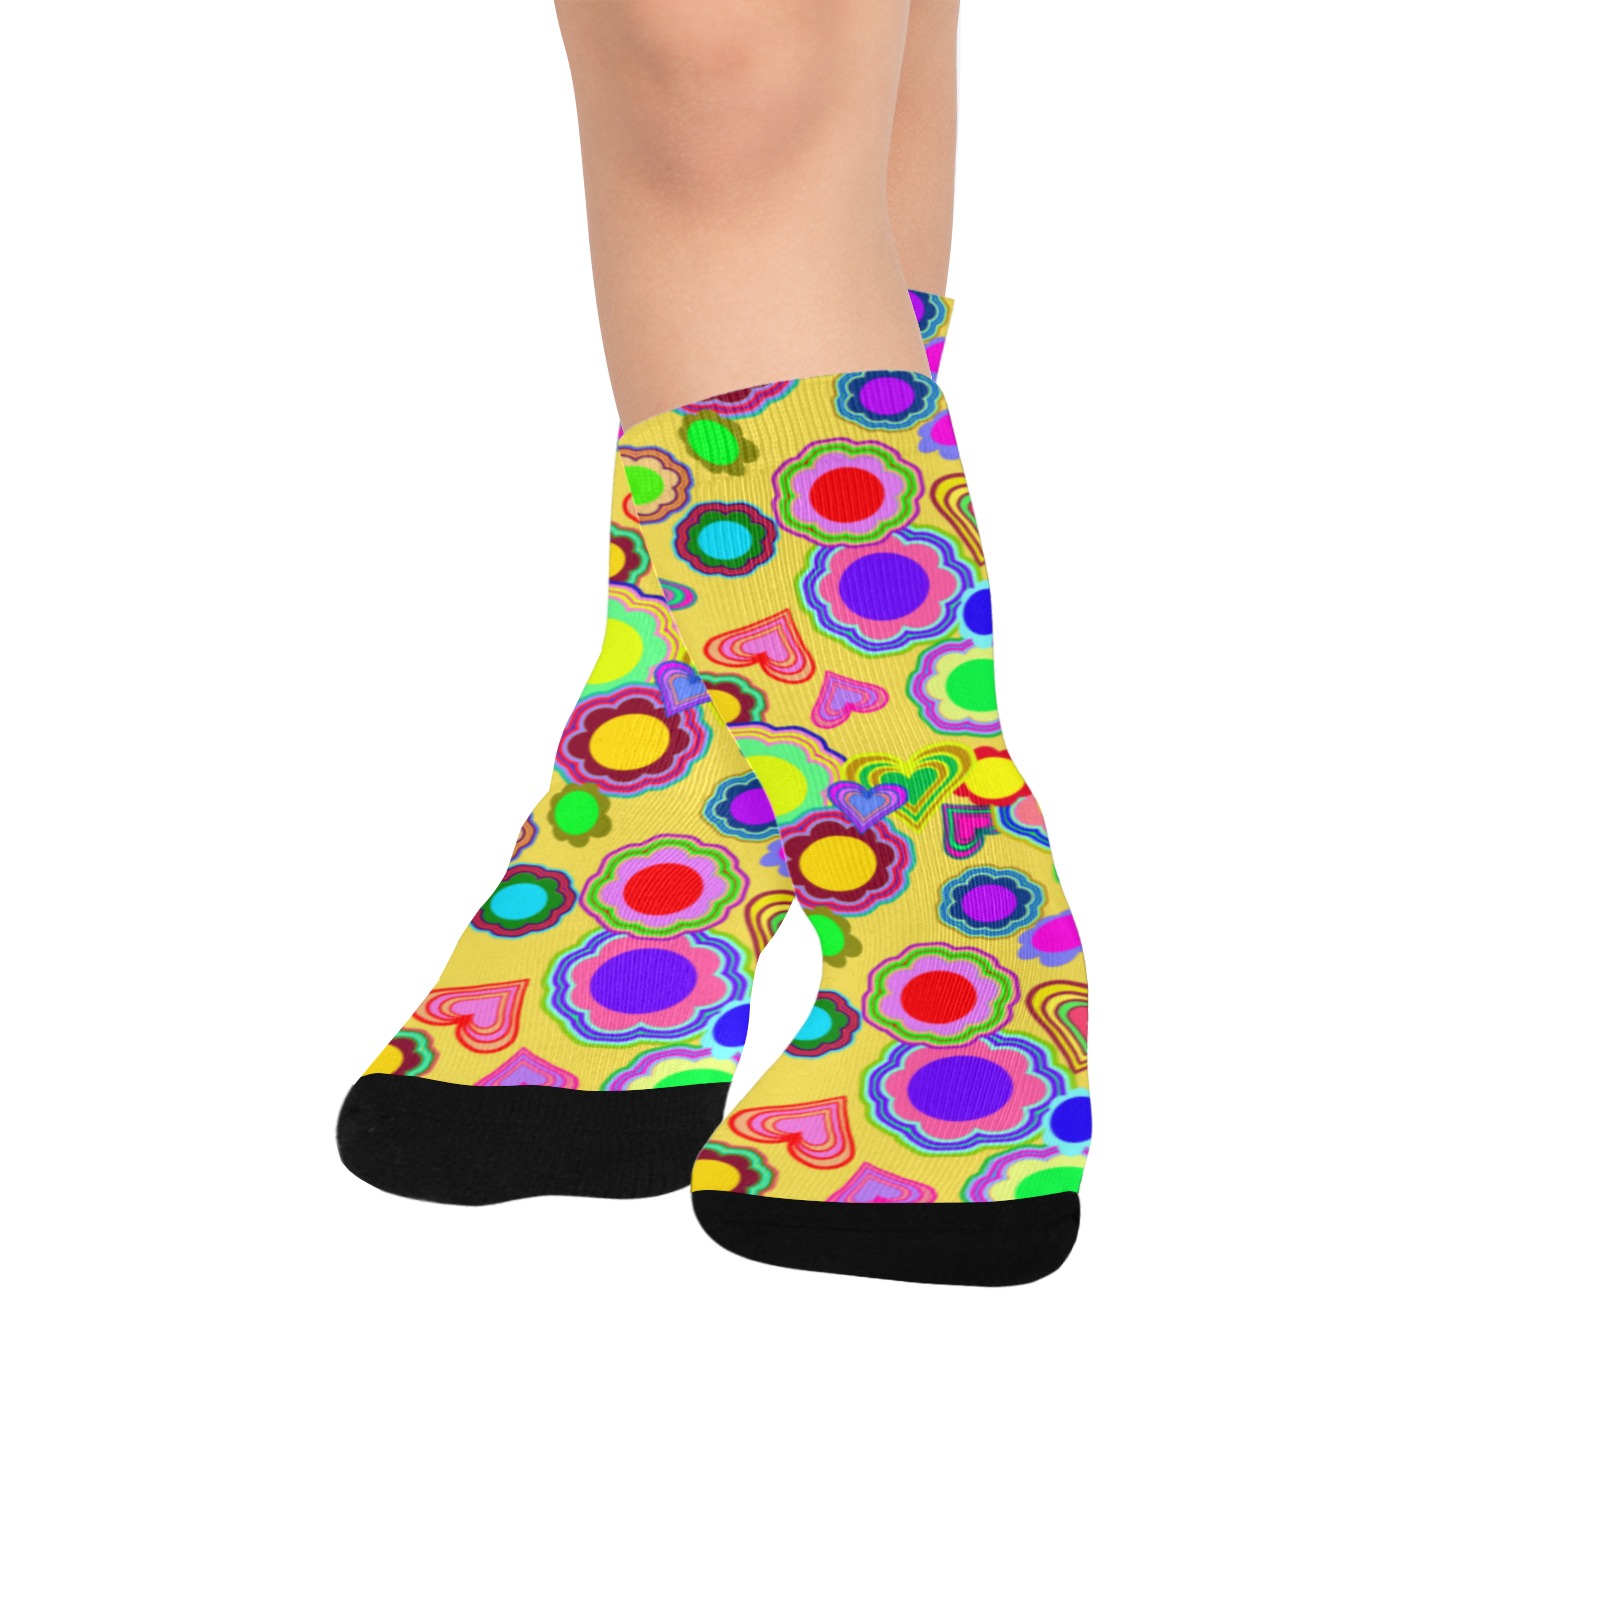 Groovy Hearts and Flowers Yellow Custom Socks for Kids